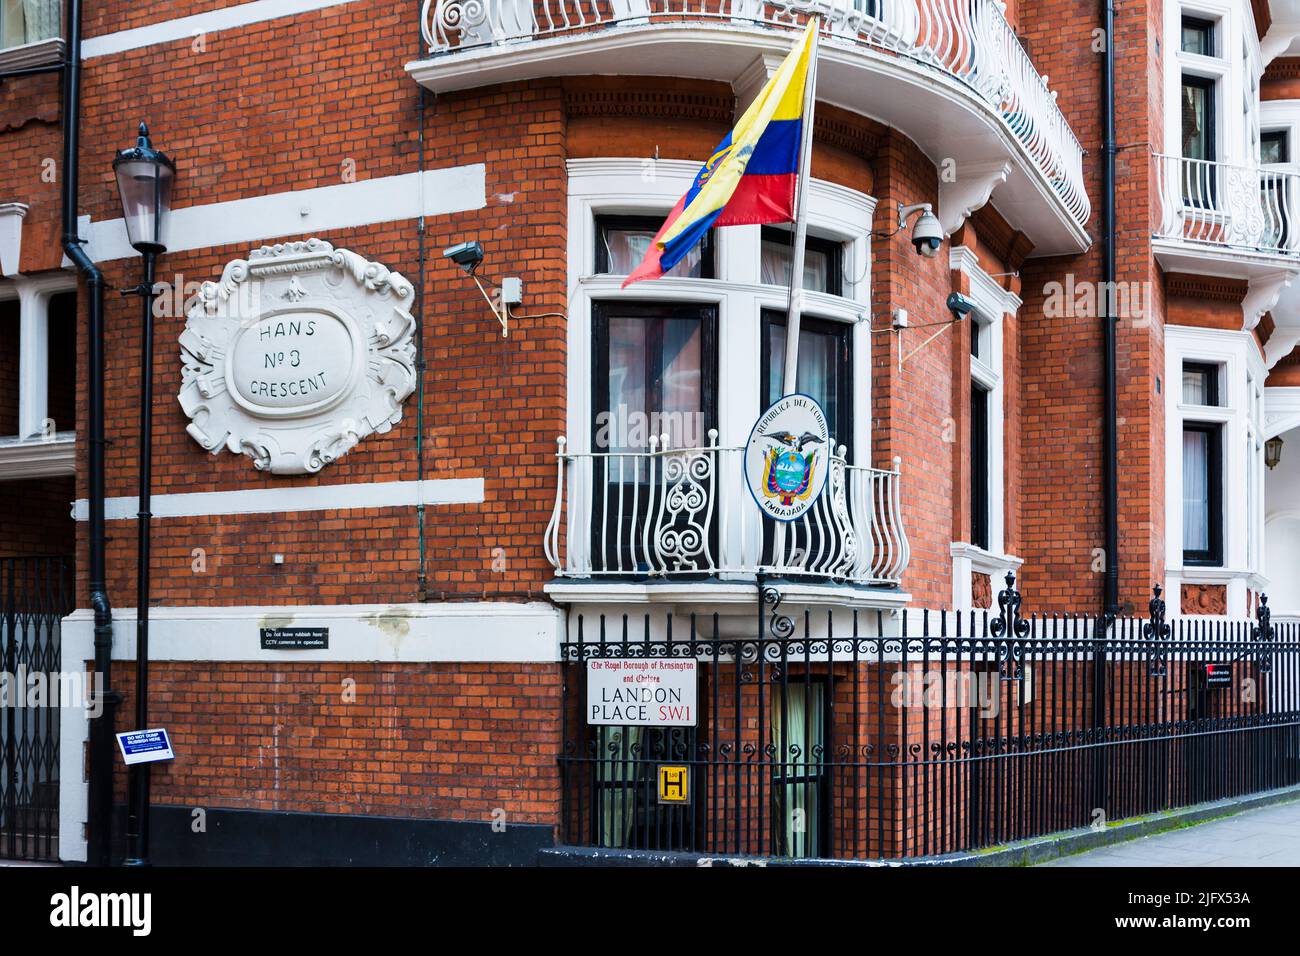 Botschaftsrepublik Ecuador. Landon Place, Knightsbridge, Royal Borough of Kensington und Chelsea. London, England, Großbritannien, Europa Stockfoto